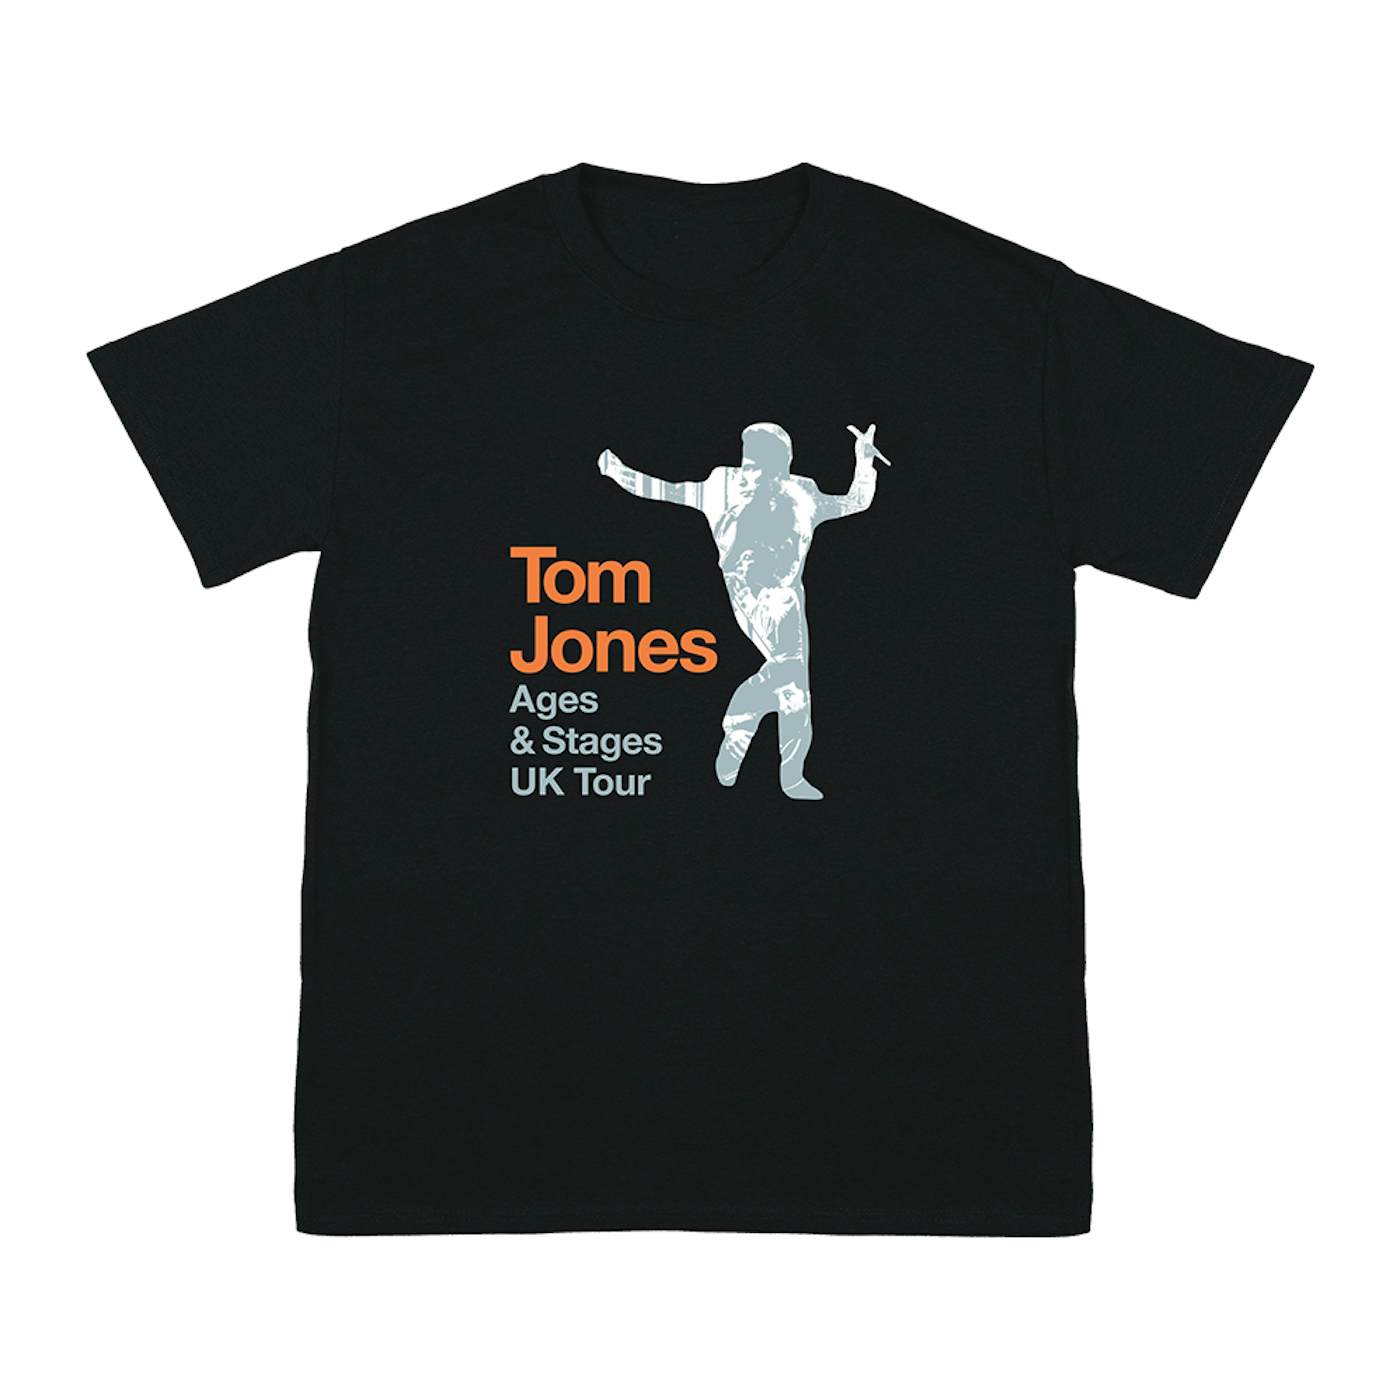 Tom Jones AGES & STAGES UK TOUR BLACK T-SHIRT